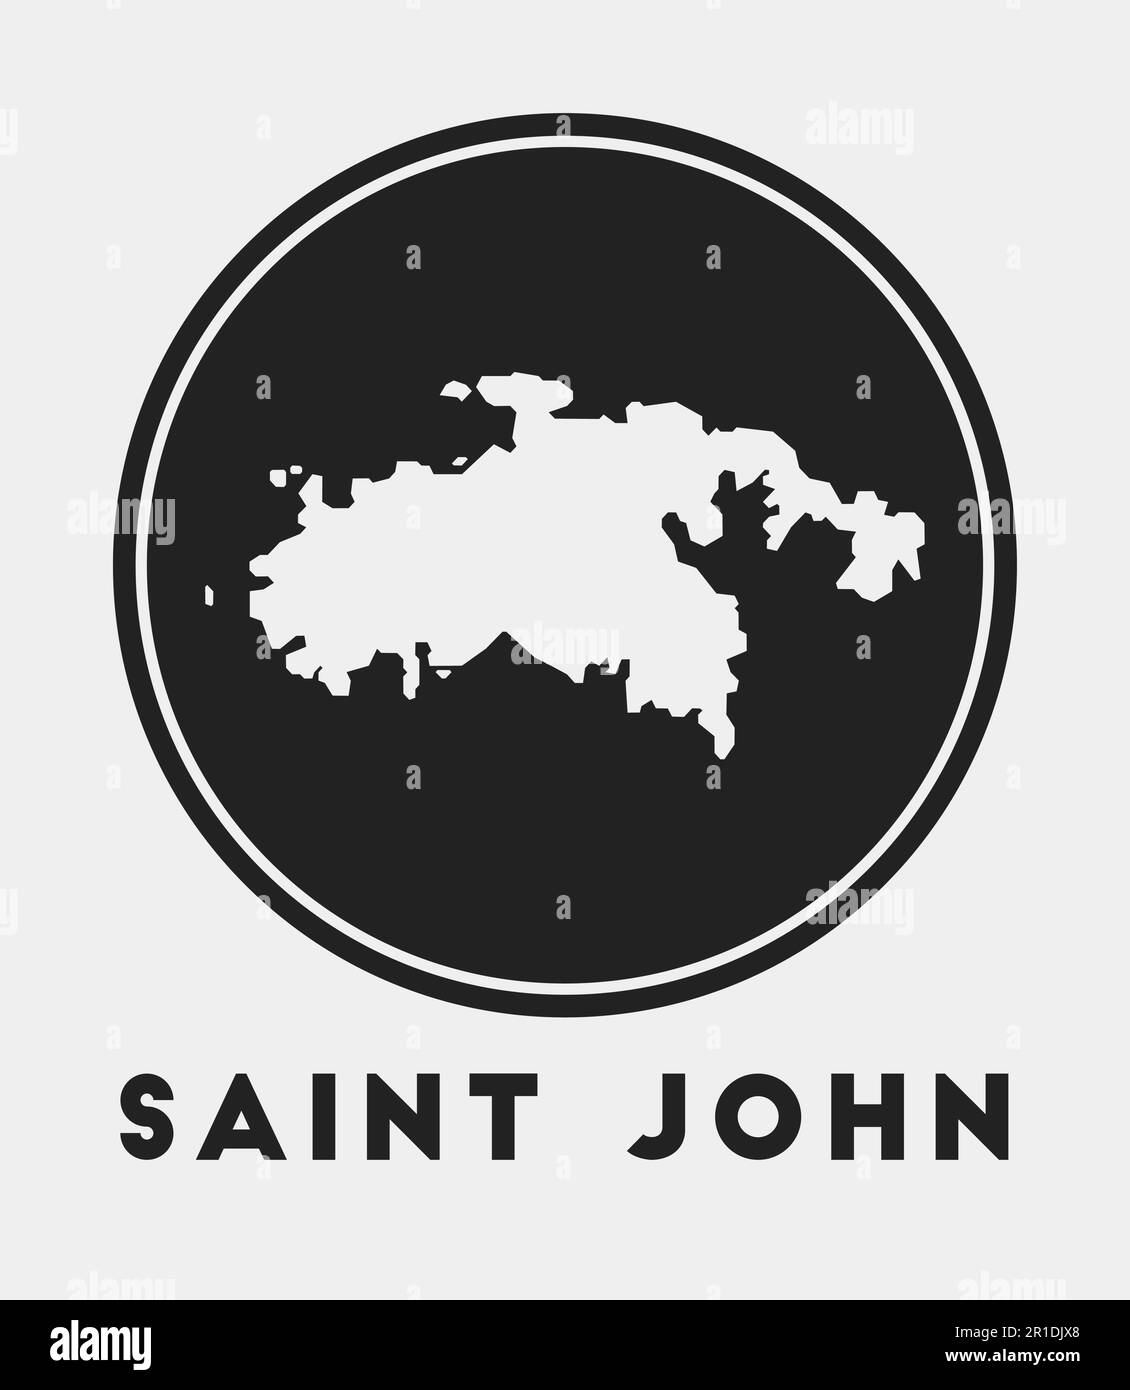 Saint John icon. Round logo with island map and title. Stylish Saint ...